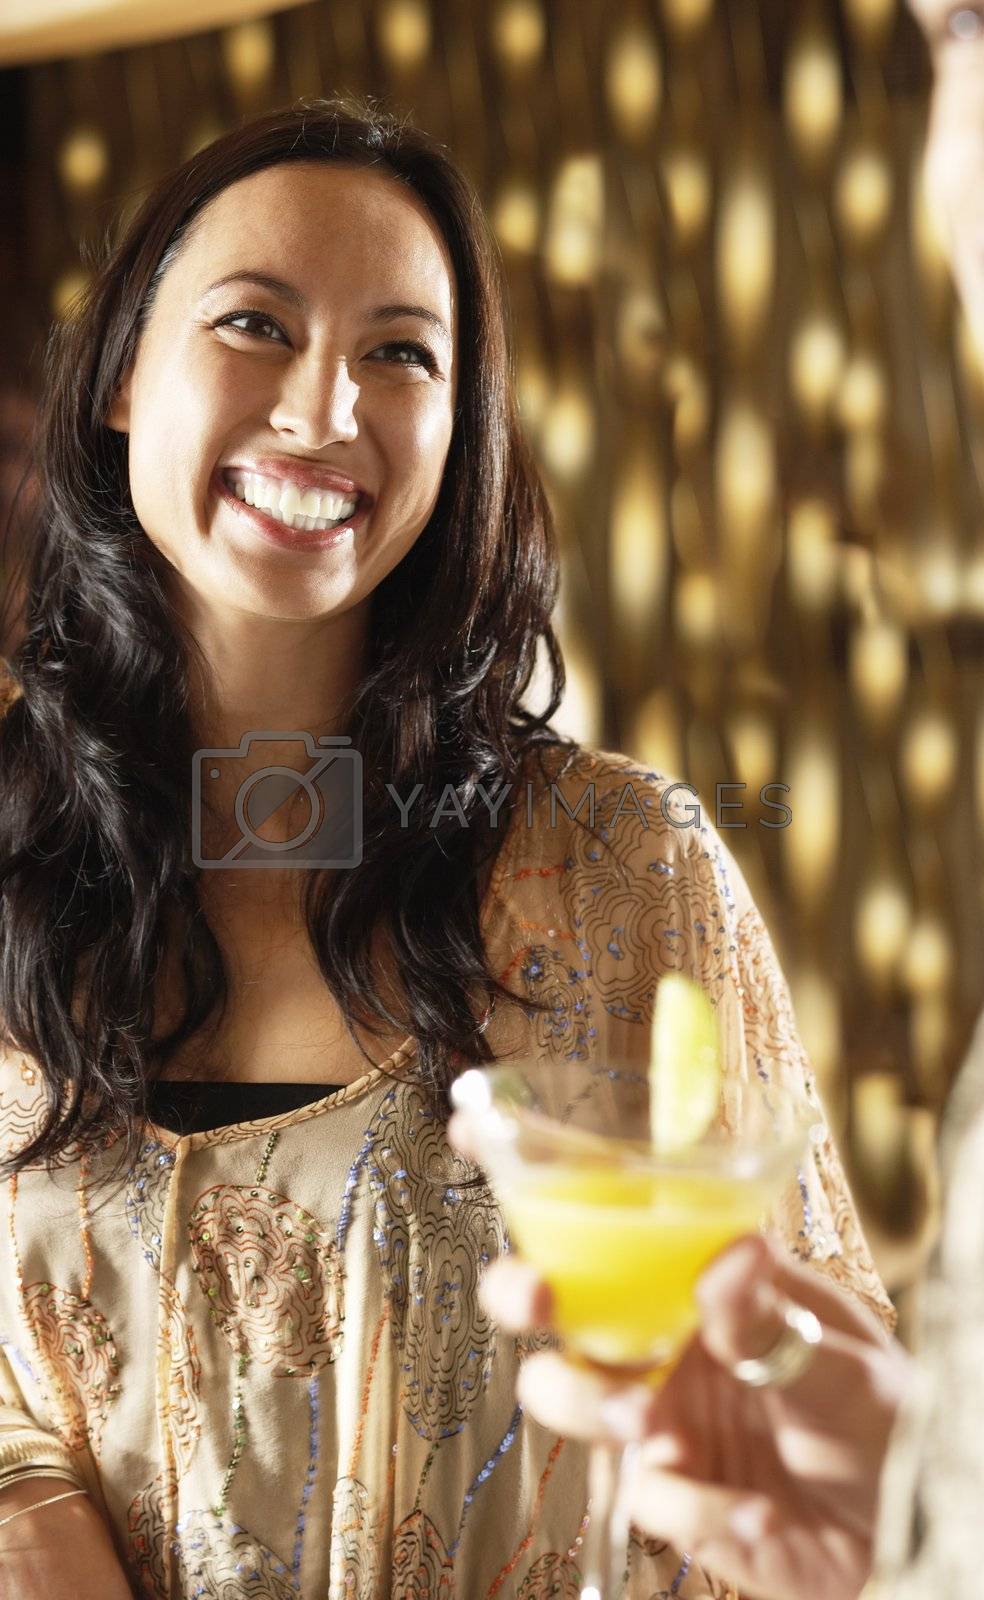 Royalty free image of Woman at Bar by moodboard